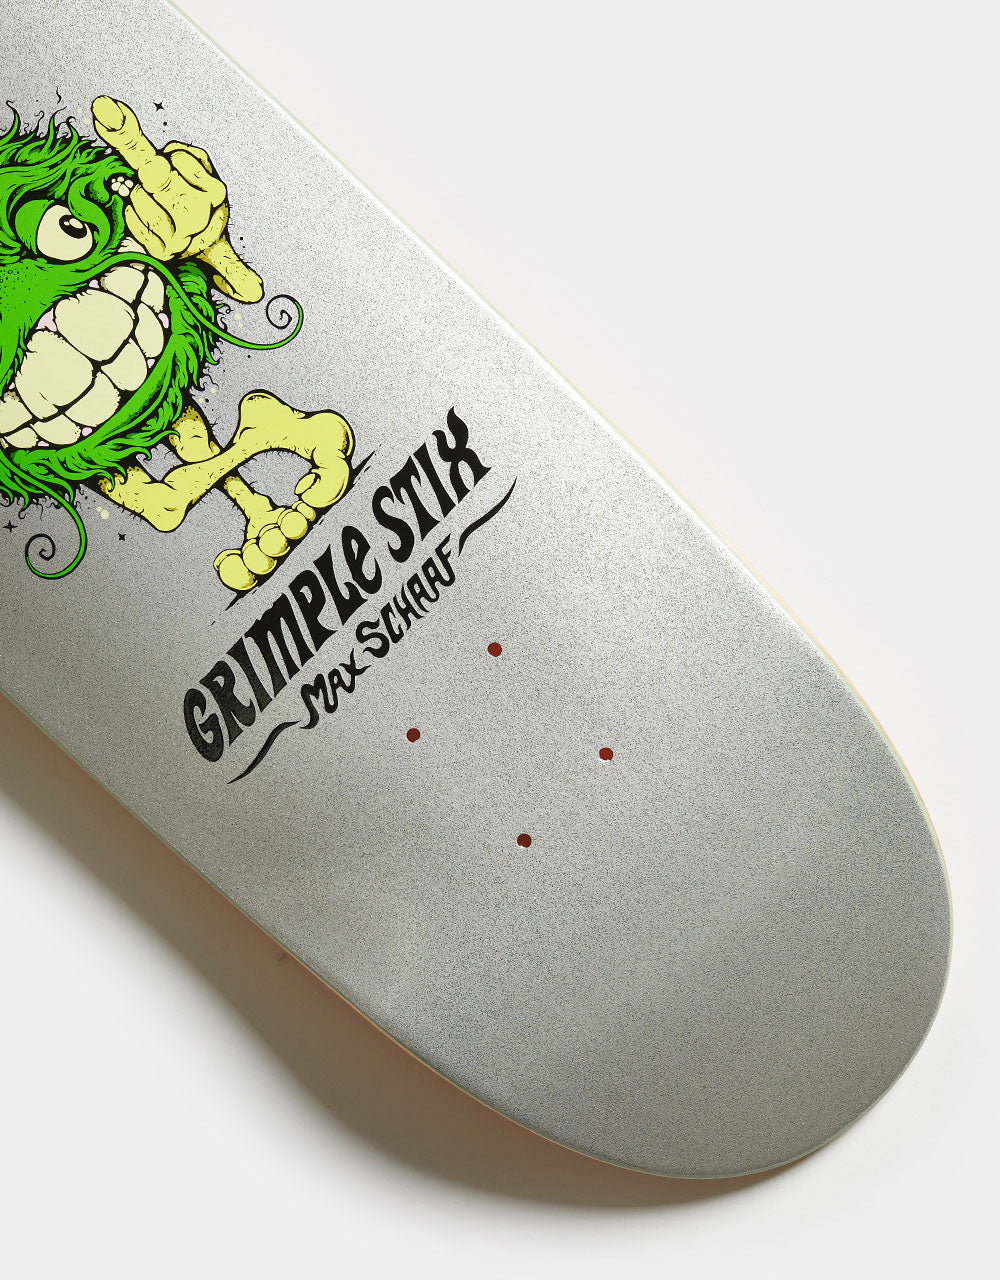 Anti Hero Schaaf Grimple Stix Asphalt Animals Skateboard Deck - 8.75"